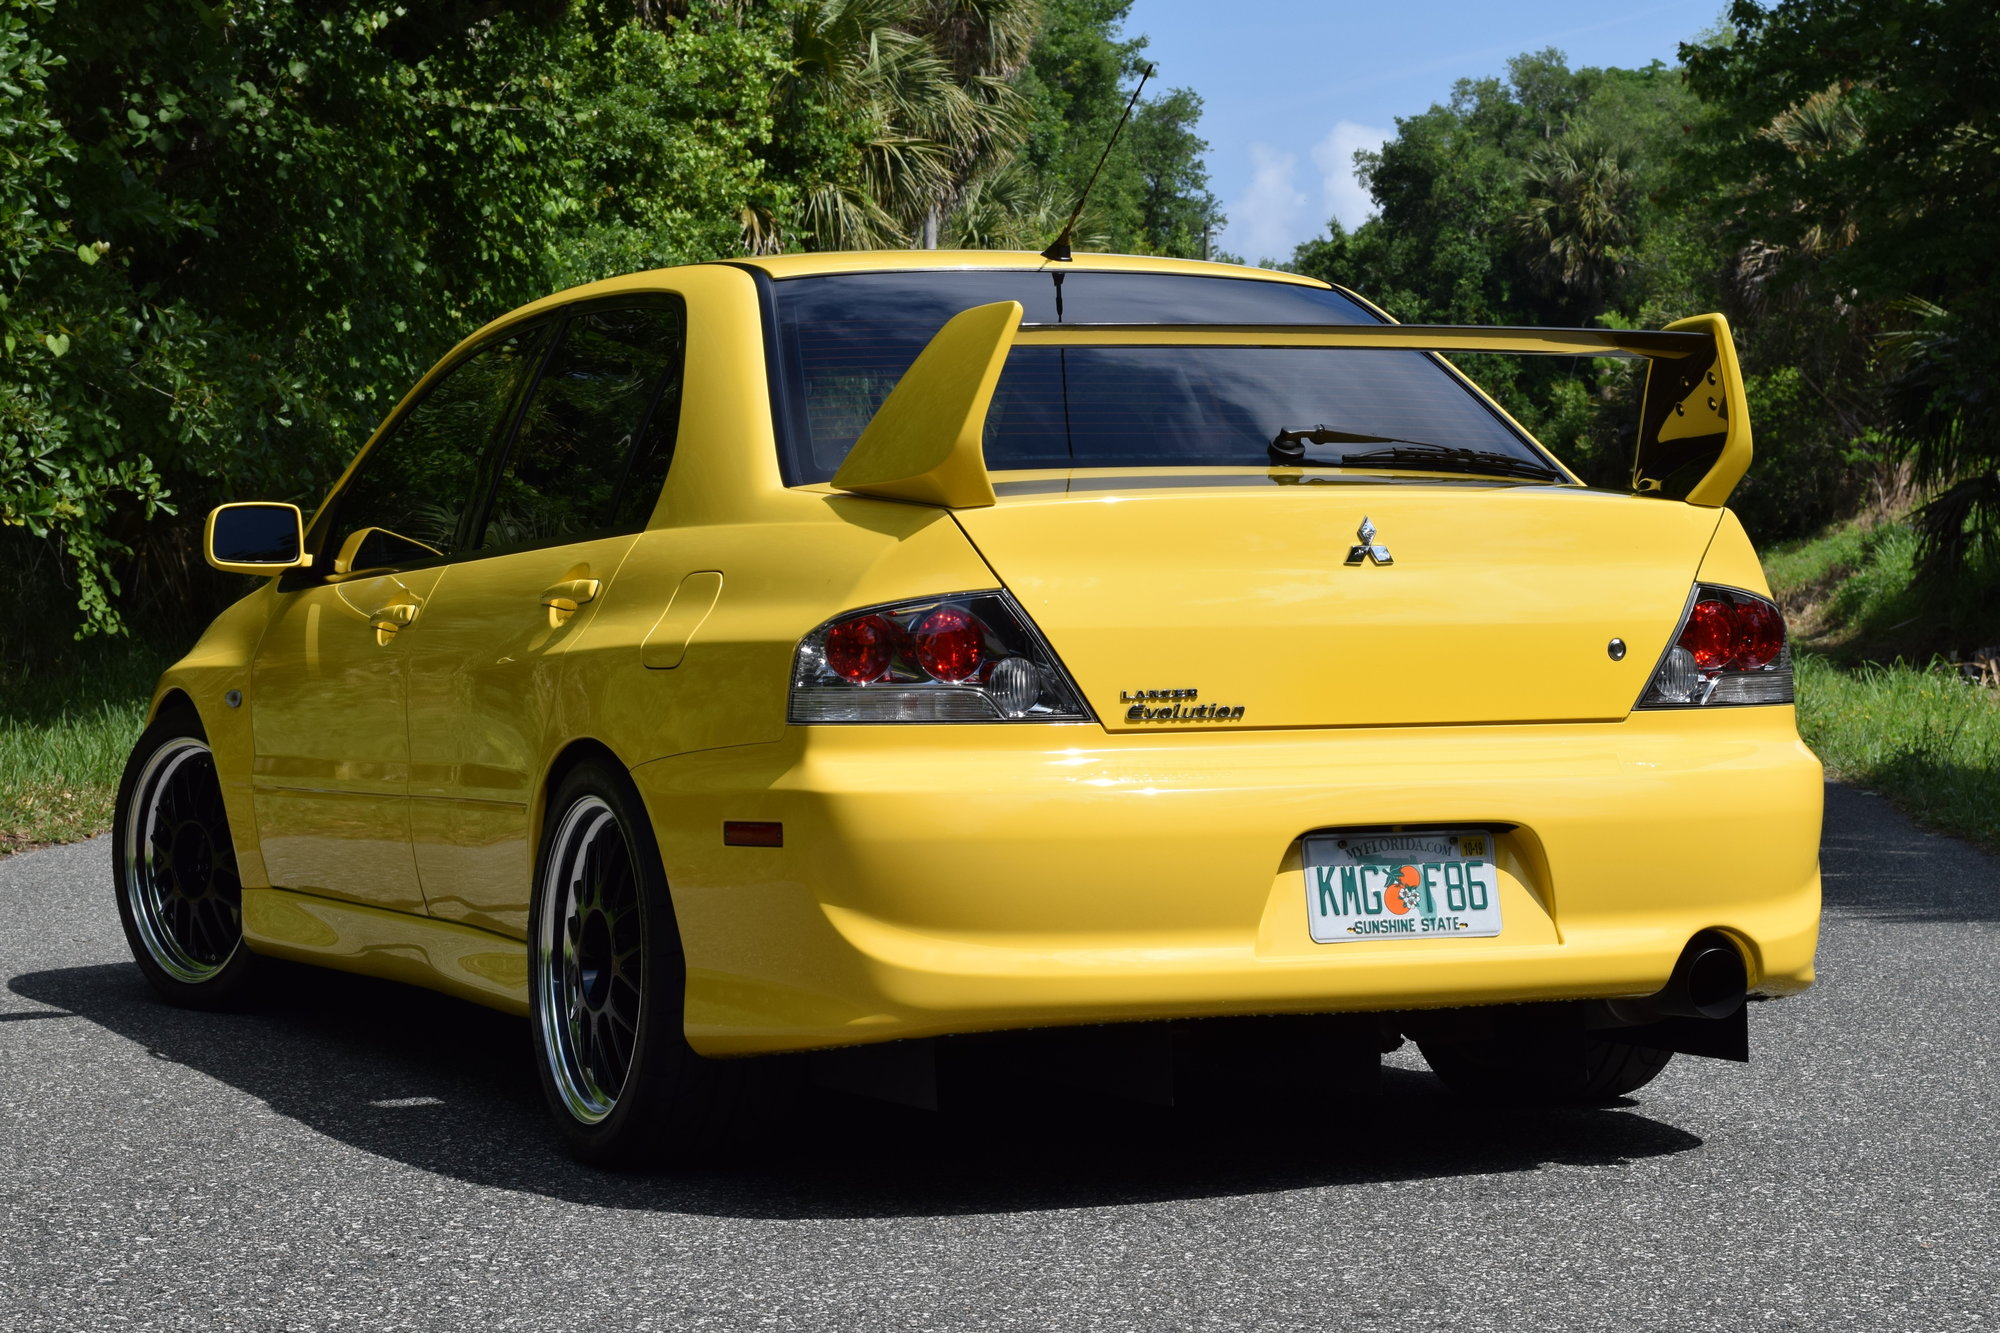 2003 Mitsubishi Lancer Evolution - Immaculate 2003 Evo 8, Lightning Yellow, 53k Miles, OCD-engineer-adult-owned - Used - VIN JA3AH86F93U110628 - 53,100 Miles - 4 cyl - AWD - Manual - Sedan - Yellow - Oviedo, FL 32765, United States